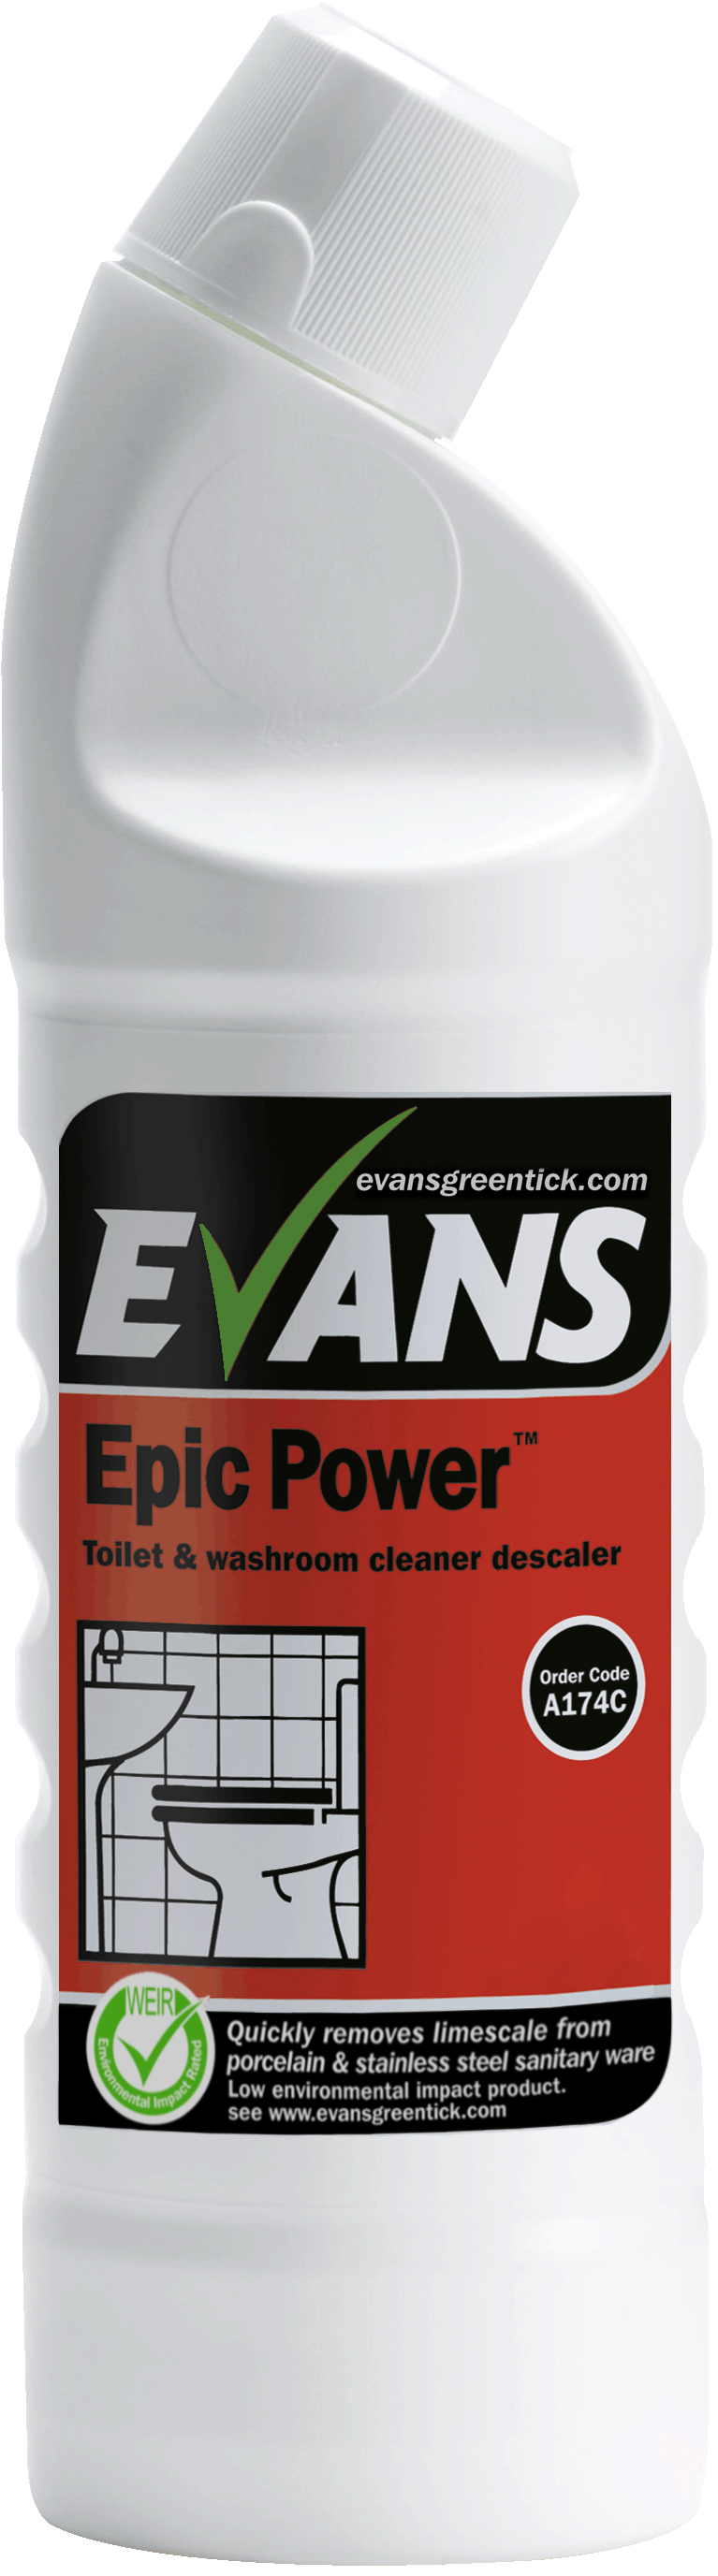 Evans Epic Power sanitaarruumide puhastusaine 1L, kastis 6tk